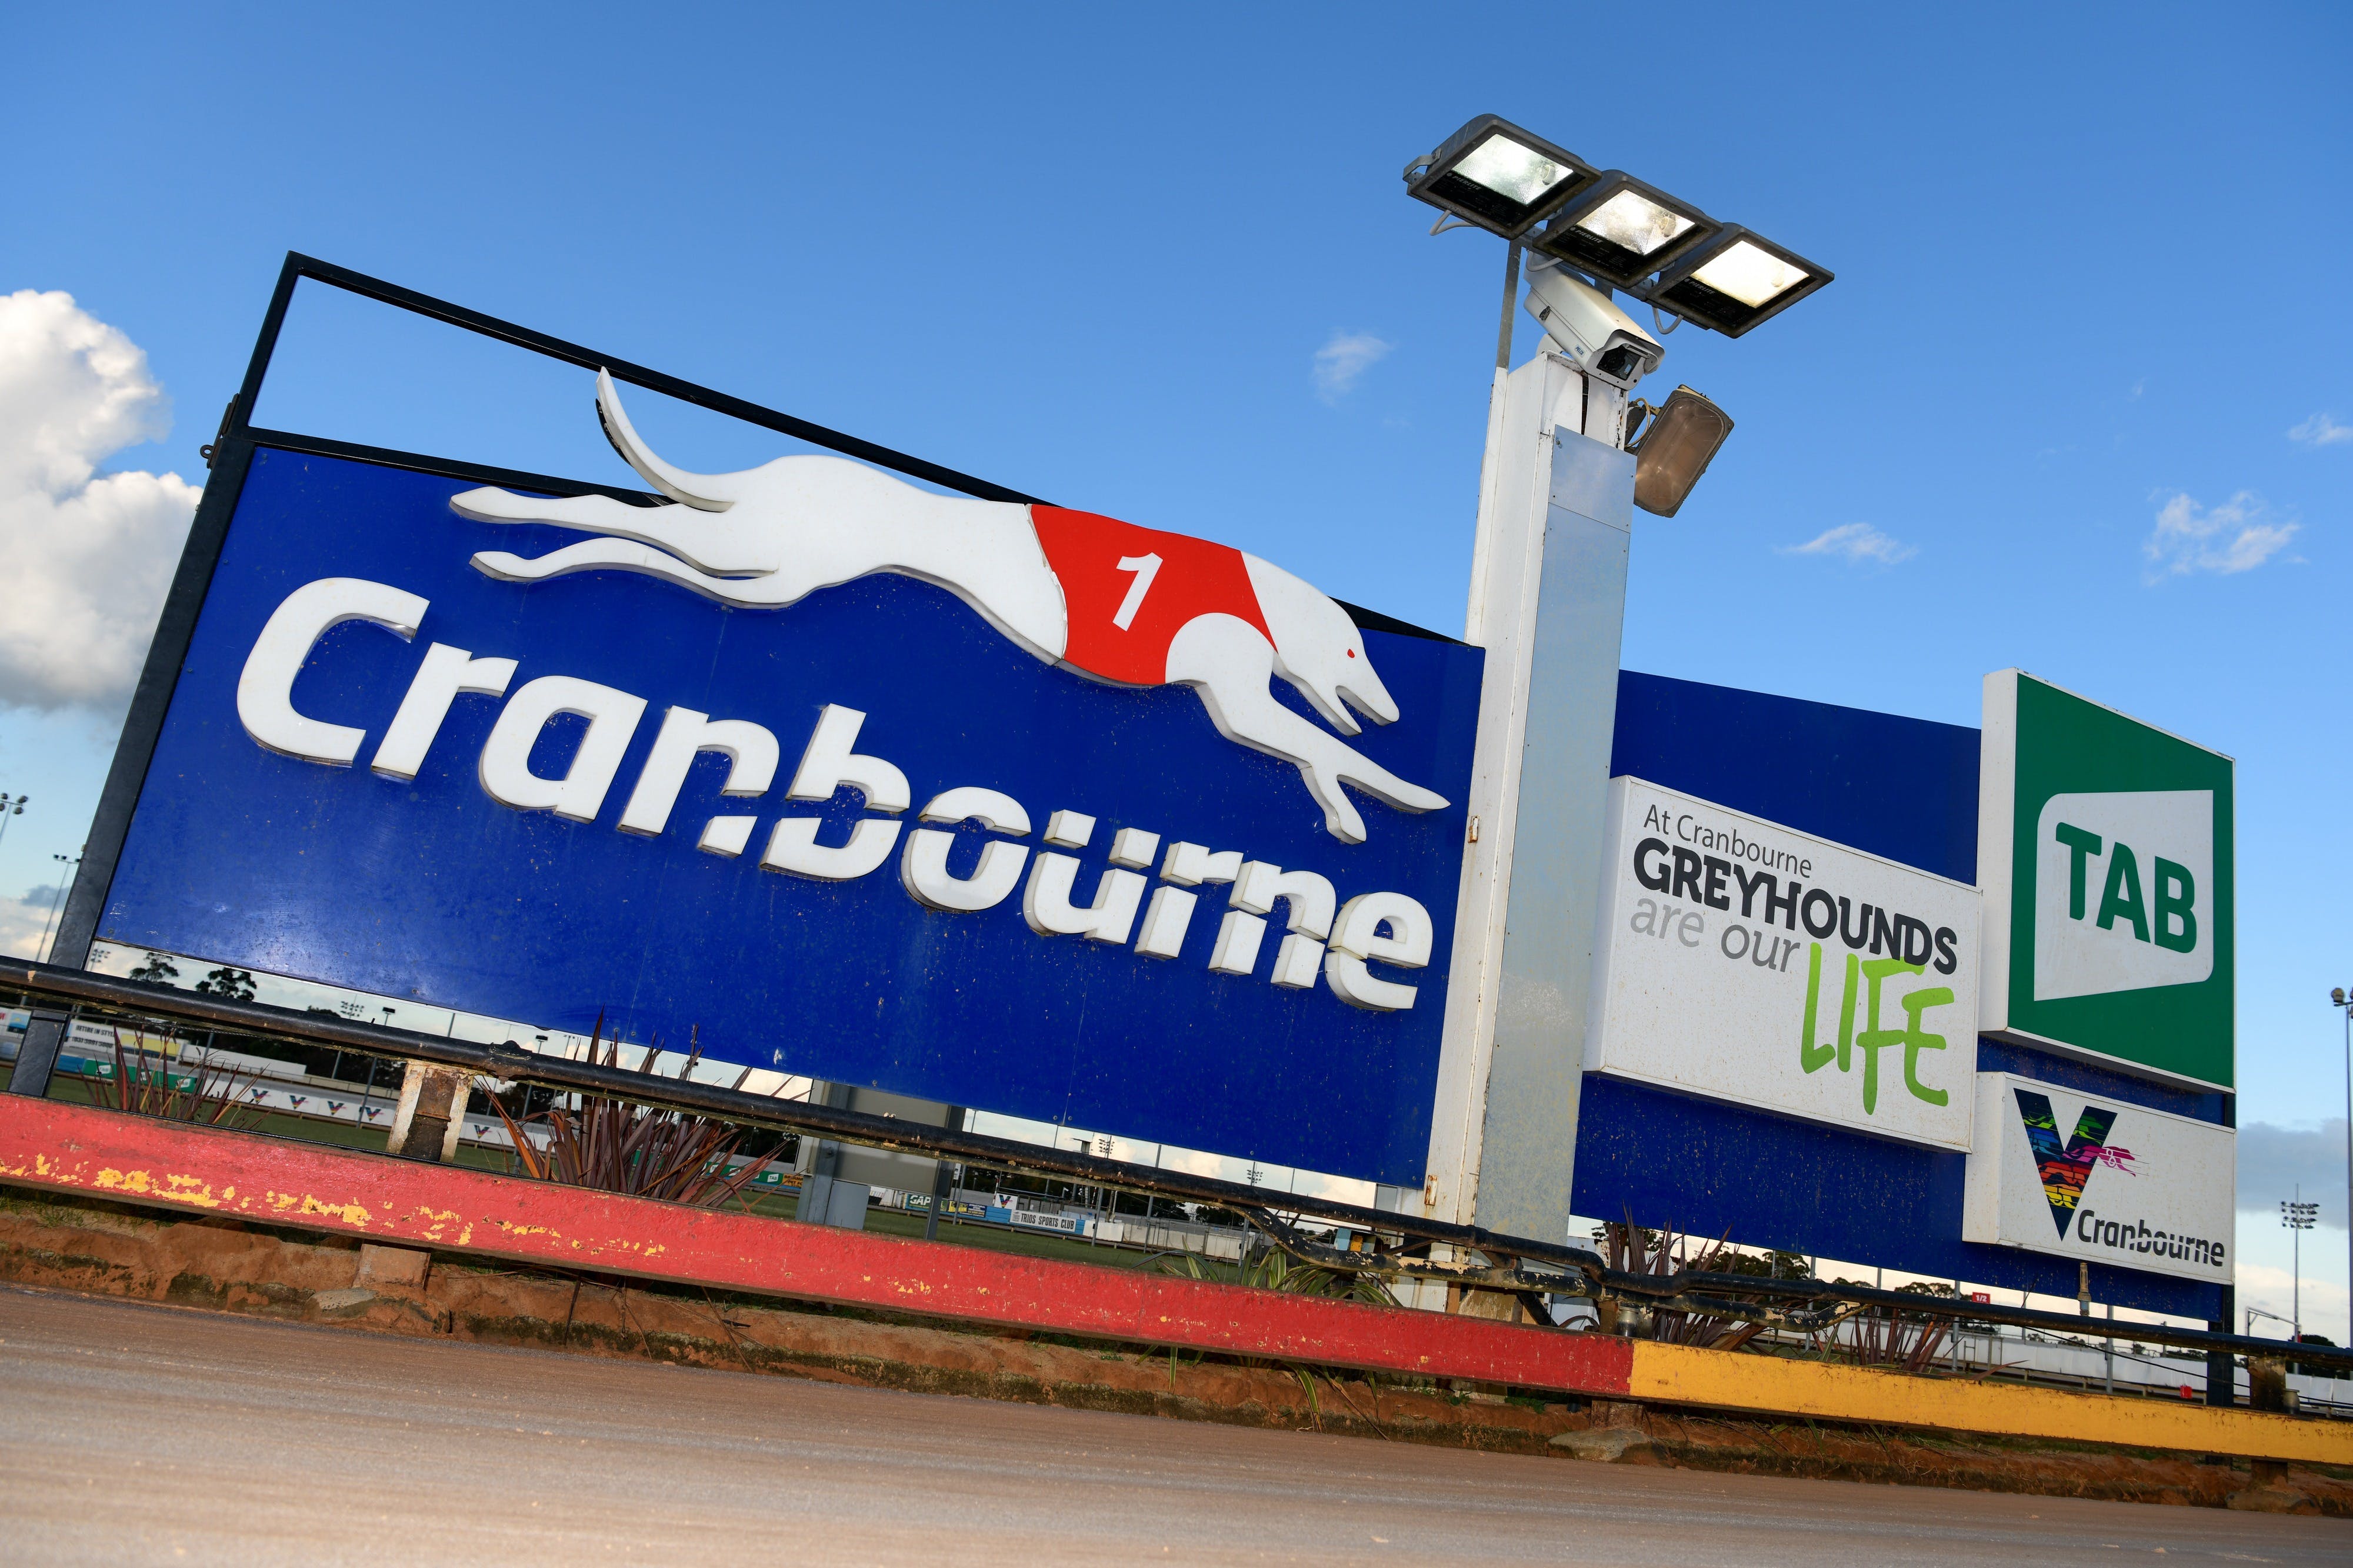 Cranbourne Greyhound Racing Club - Wagga Wagga Accommodation